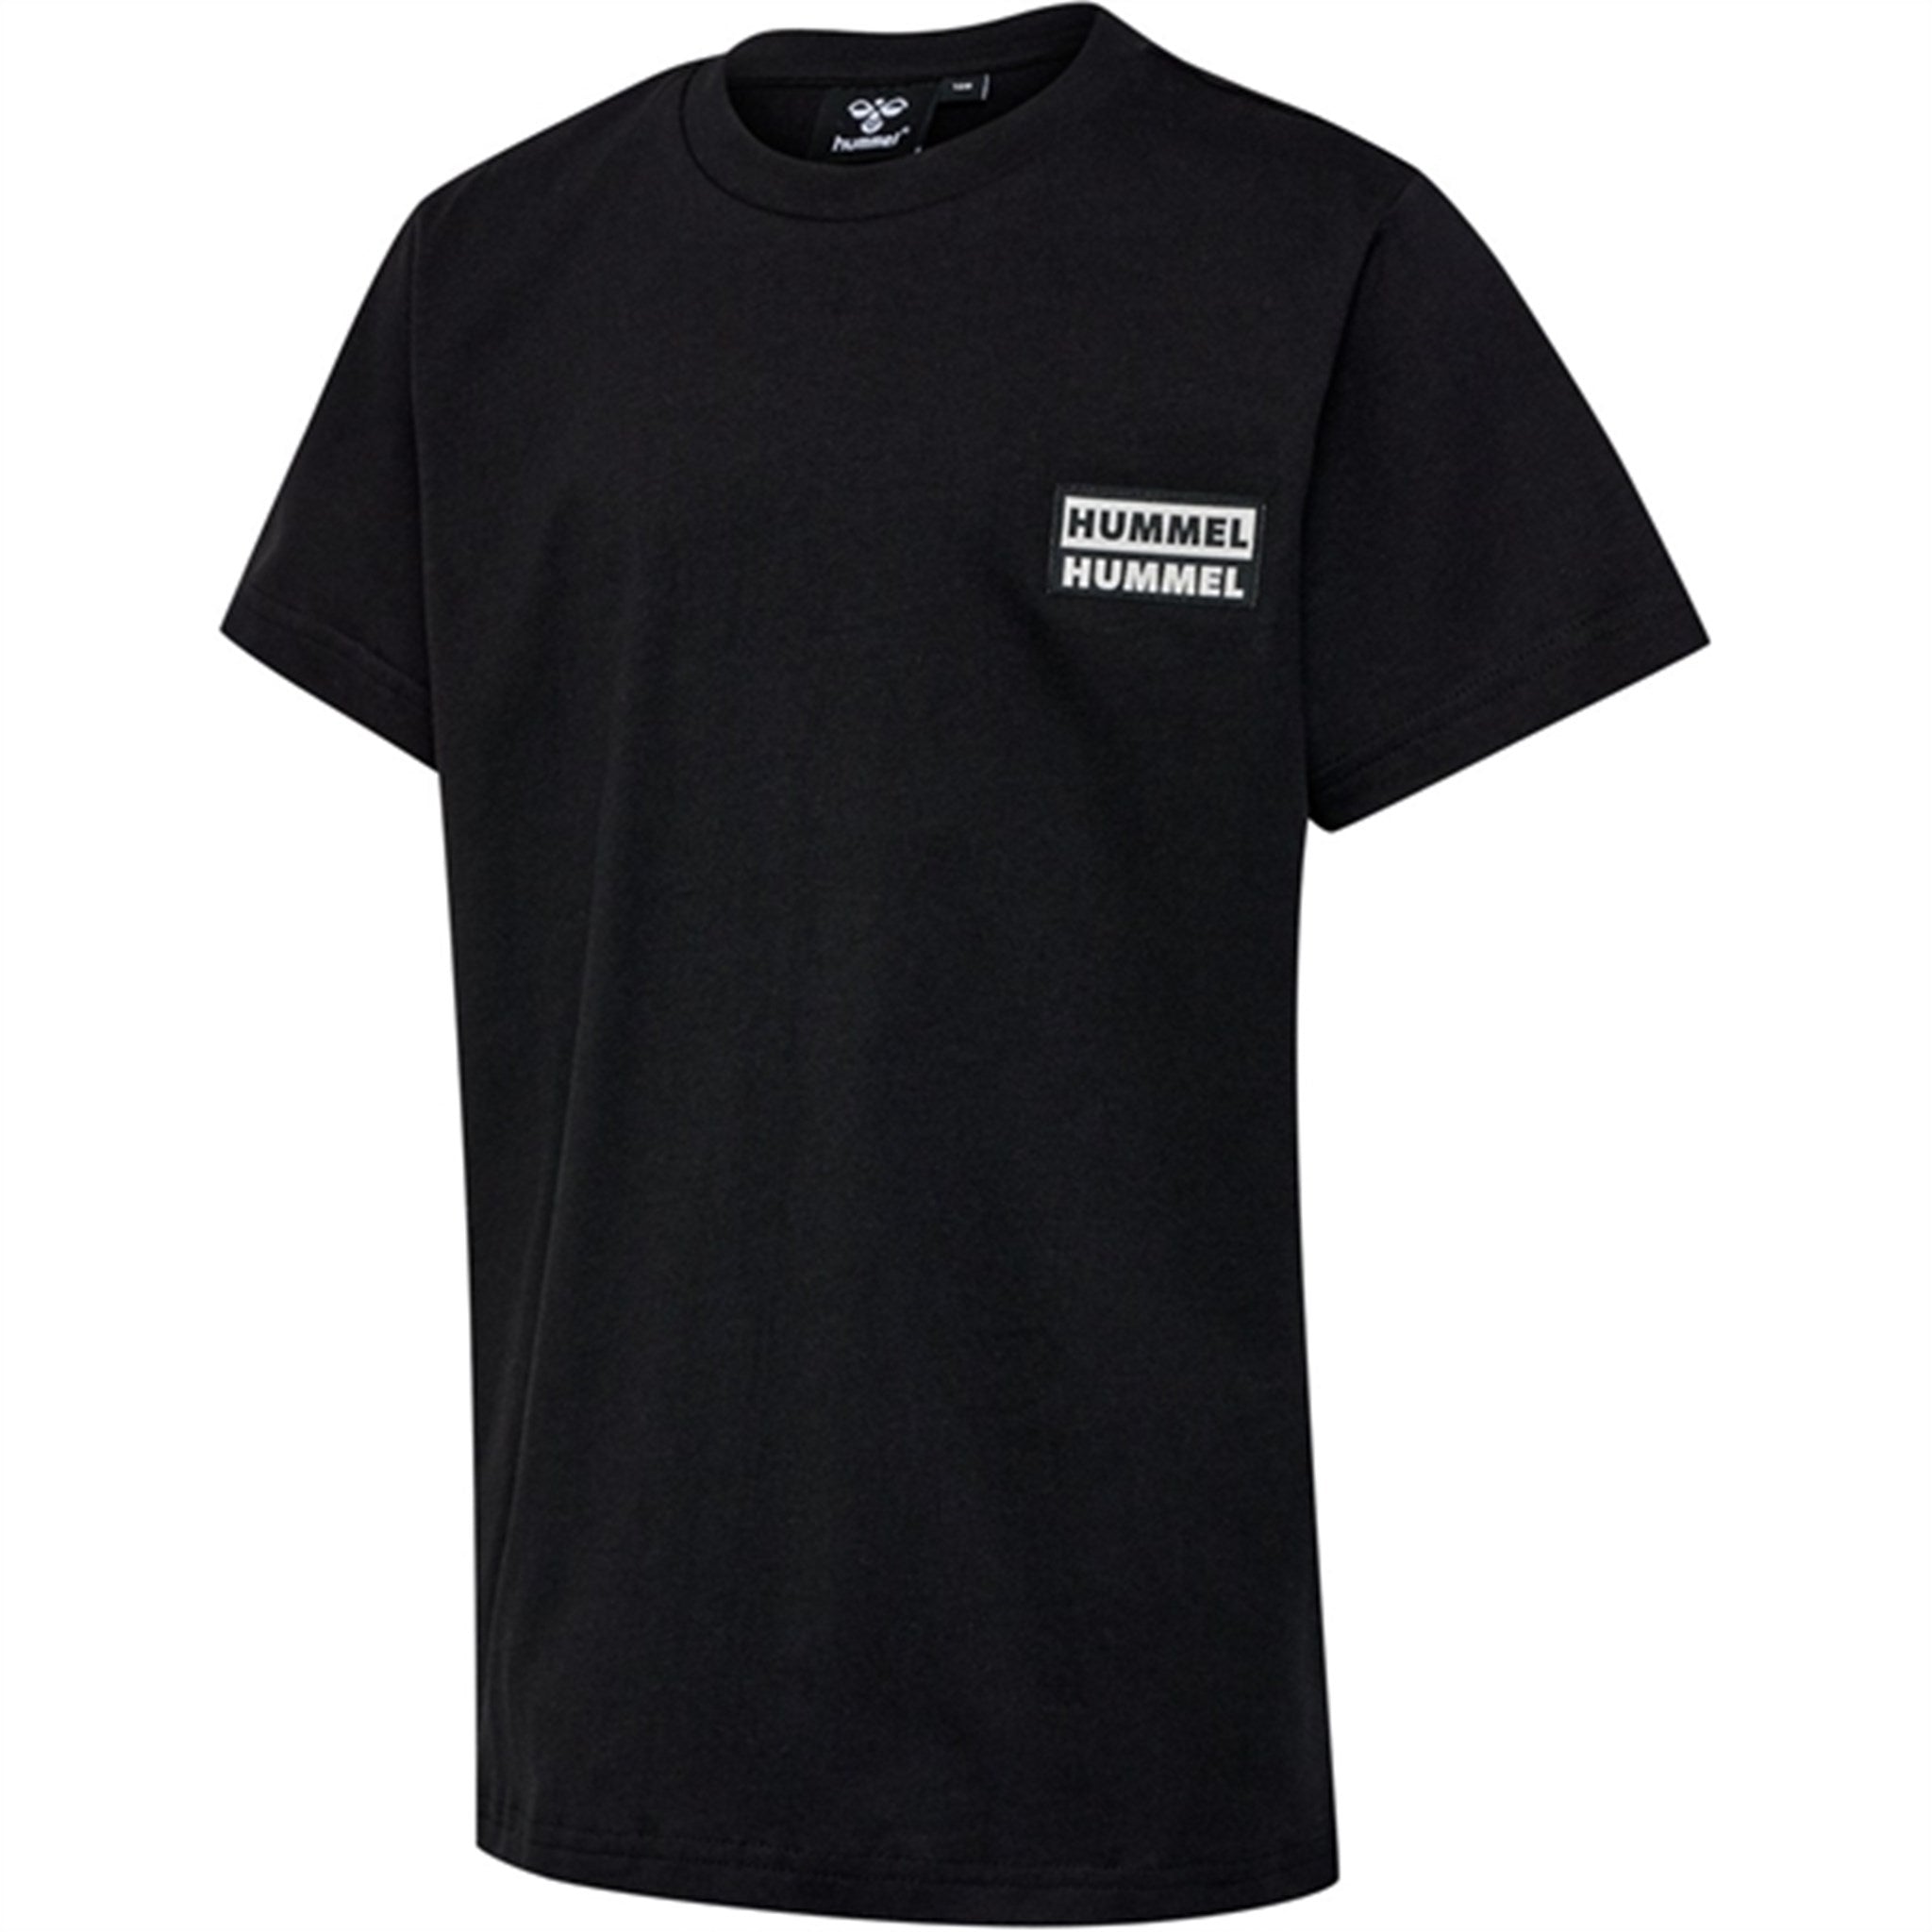 Hummel Black Surf T-Shirt 3